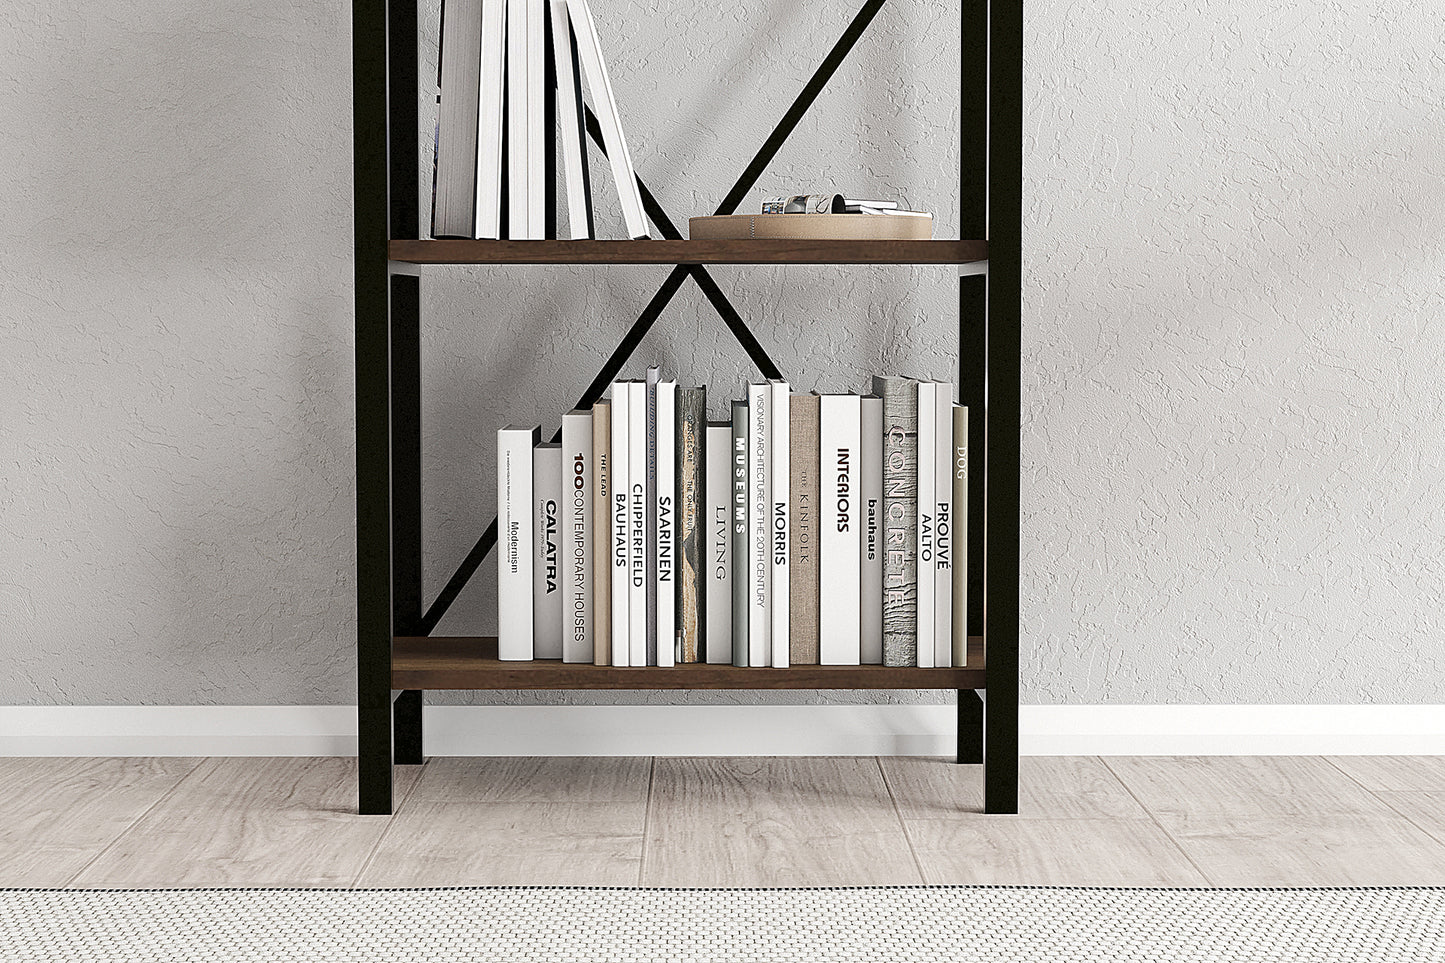 Lugo Walnut 3 Shelf Industrial / Modern Design Bookcase